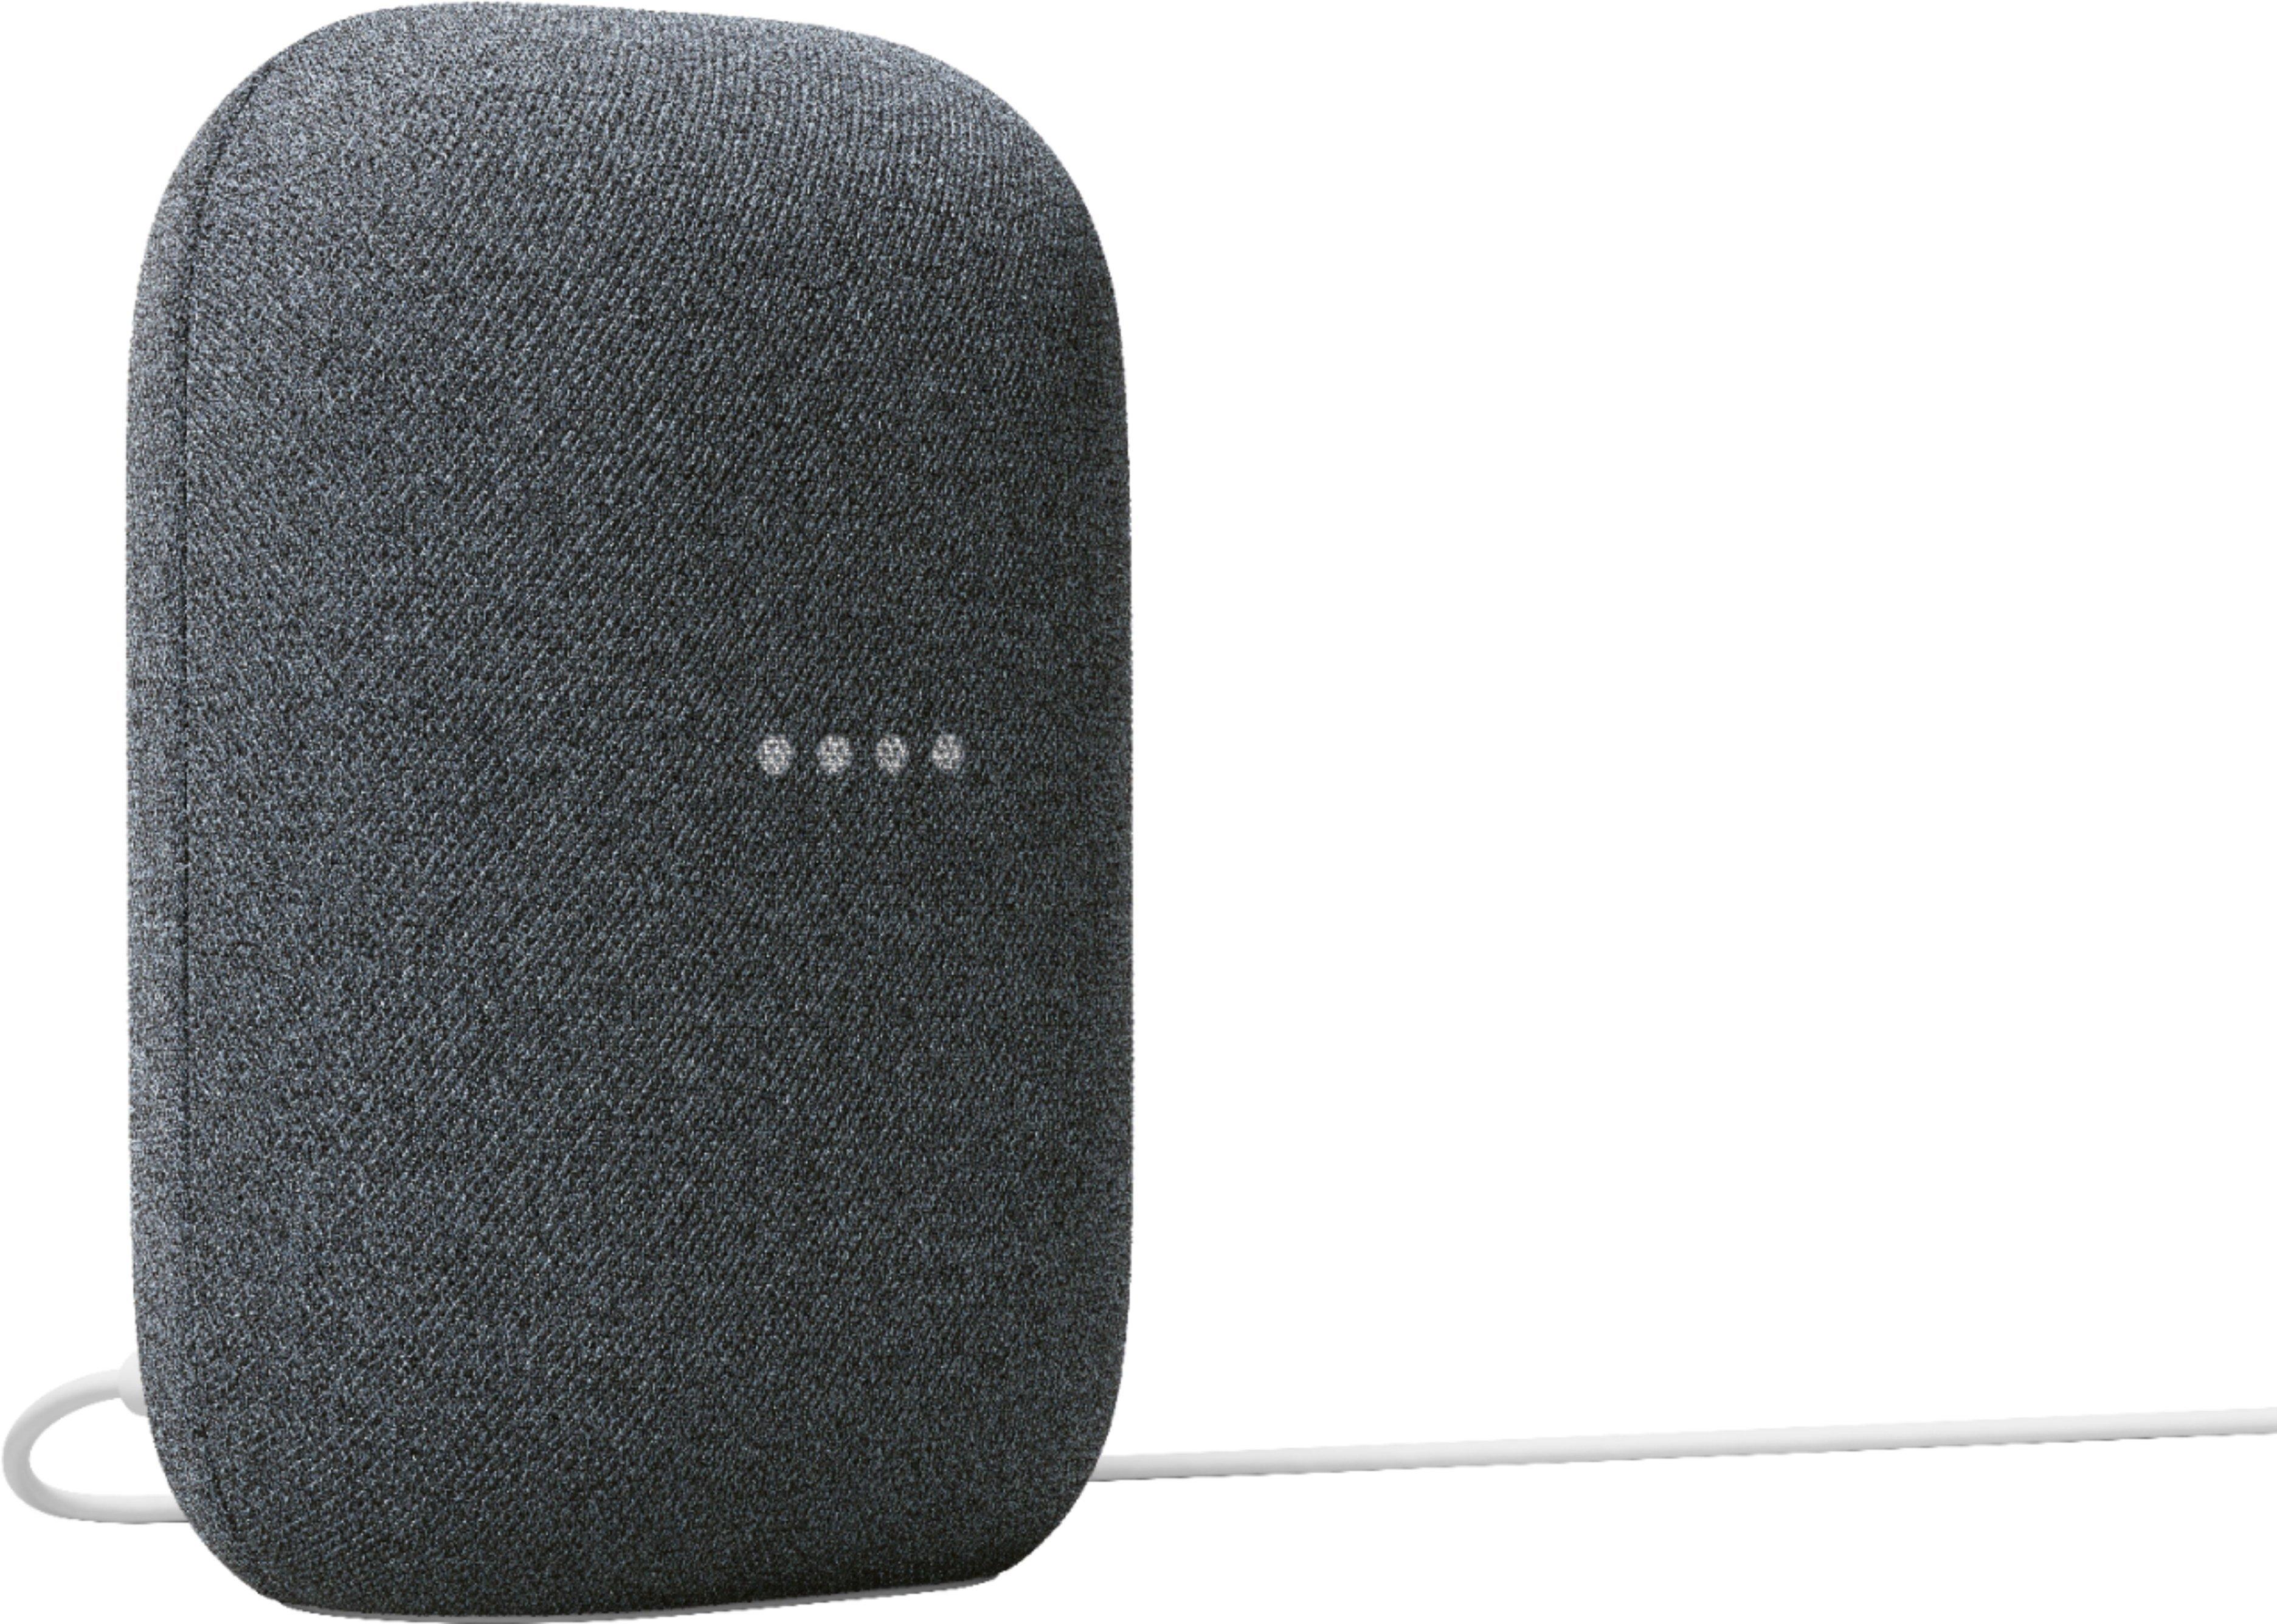 list item 2 of 8 Google Nest Audio Smart Speaker